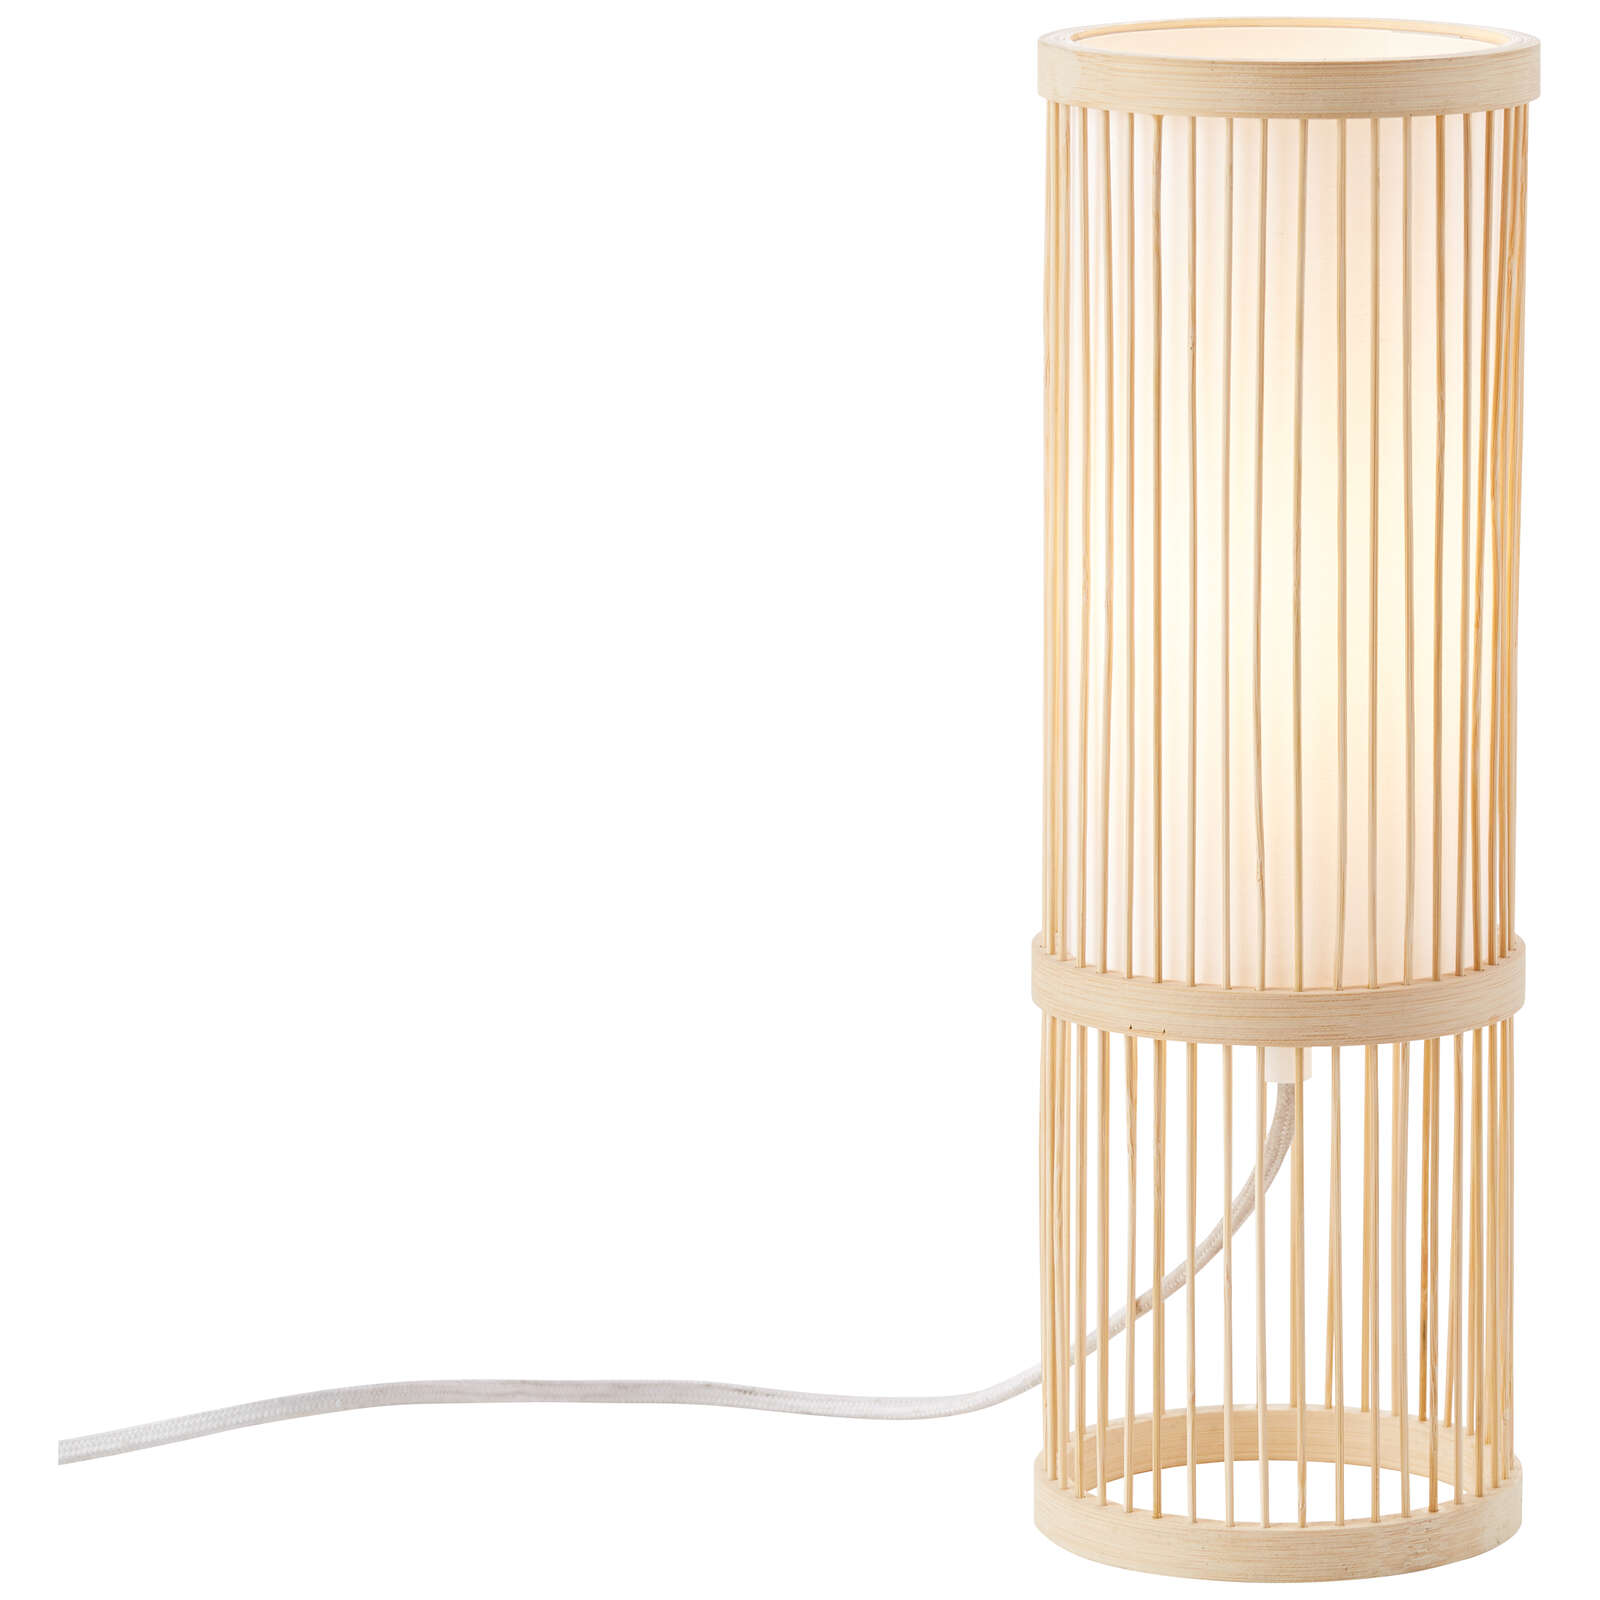             Bamboe tafellamp - Luise 2 - Bruin
        